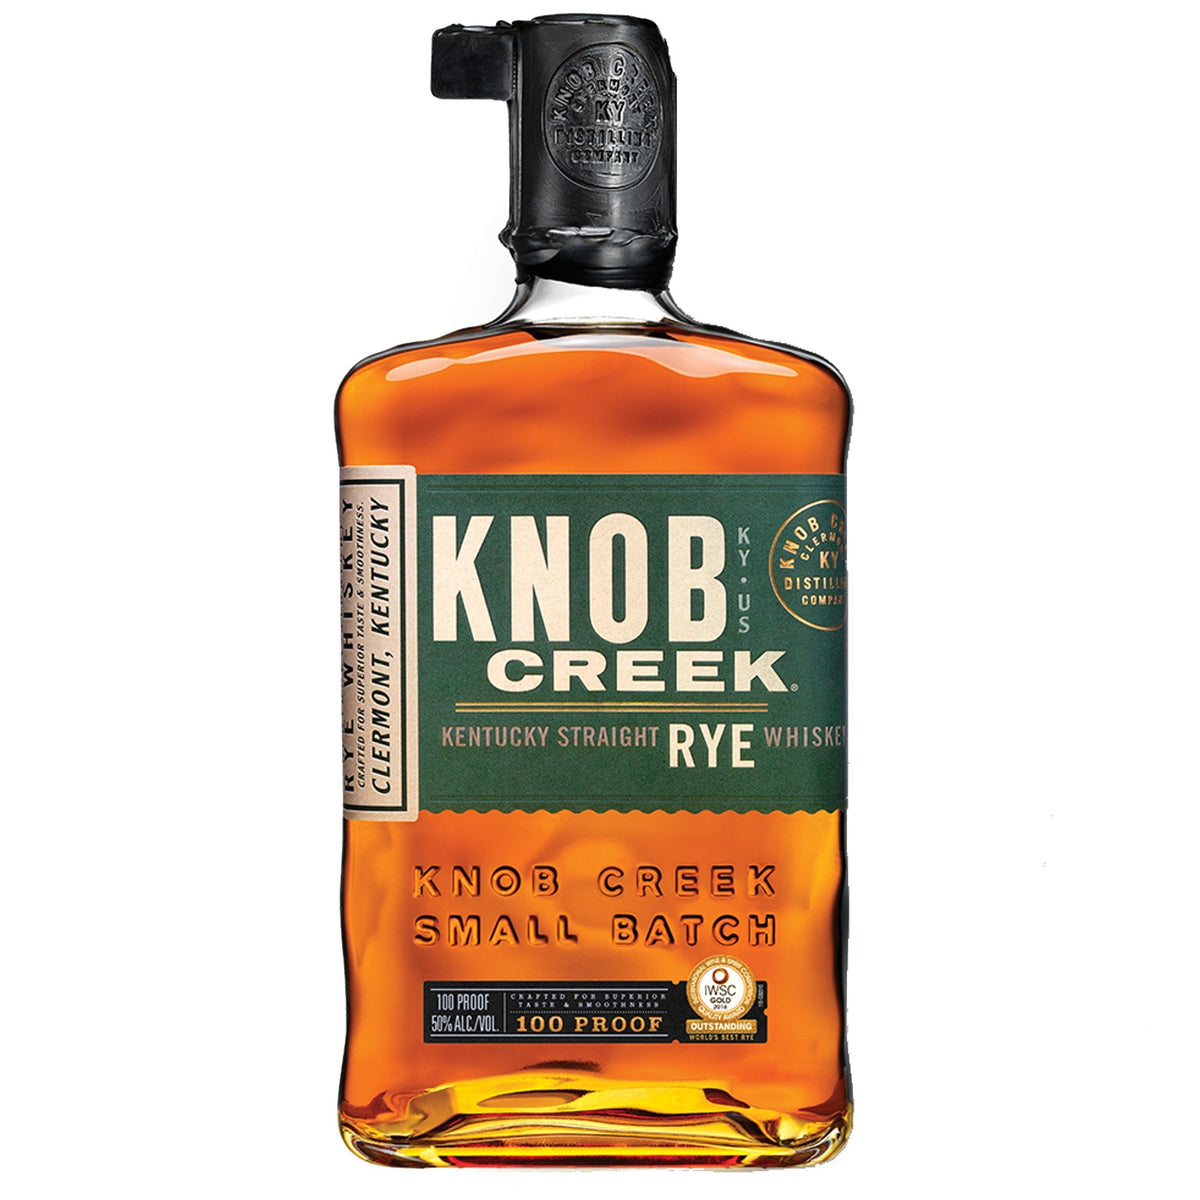 Knob Creek Small Batch Kentucky Straight Rye Whiskey (750ml)